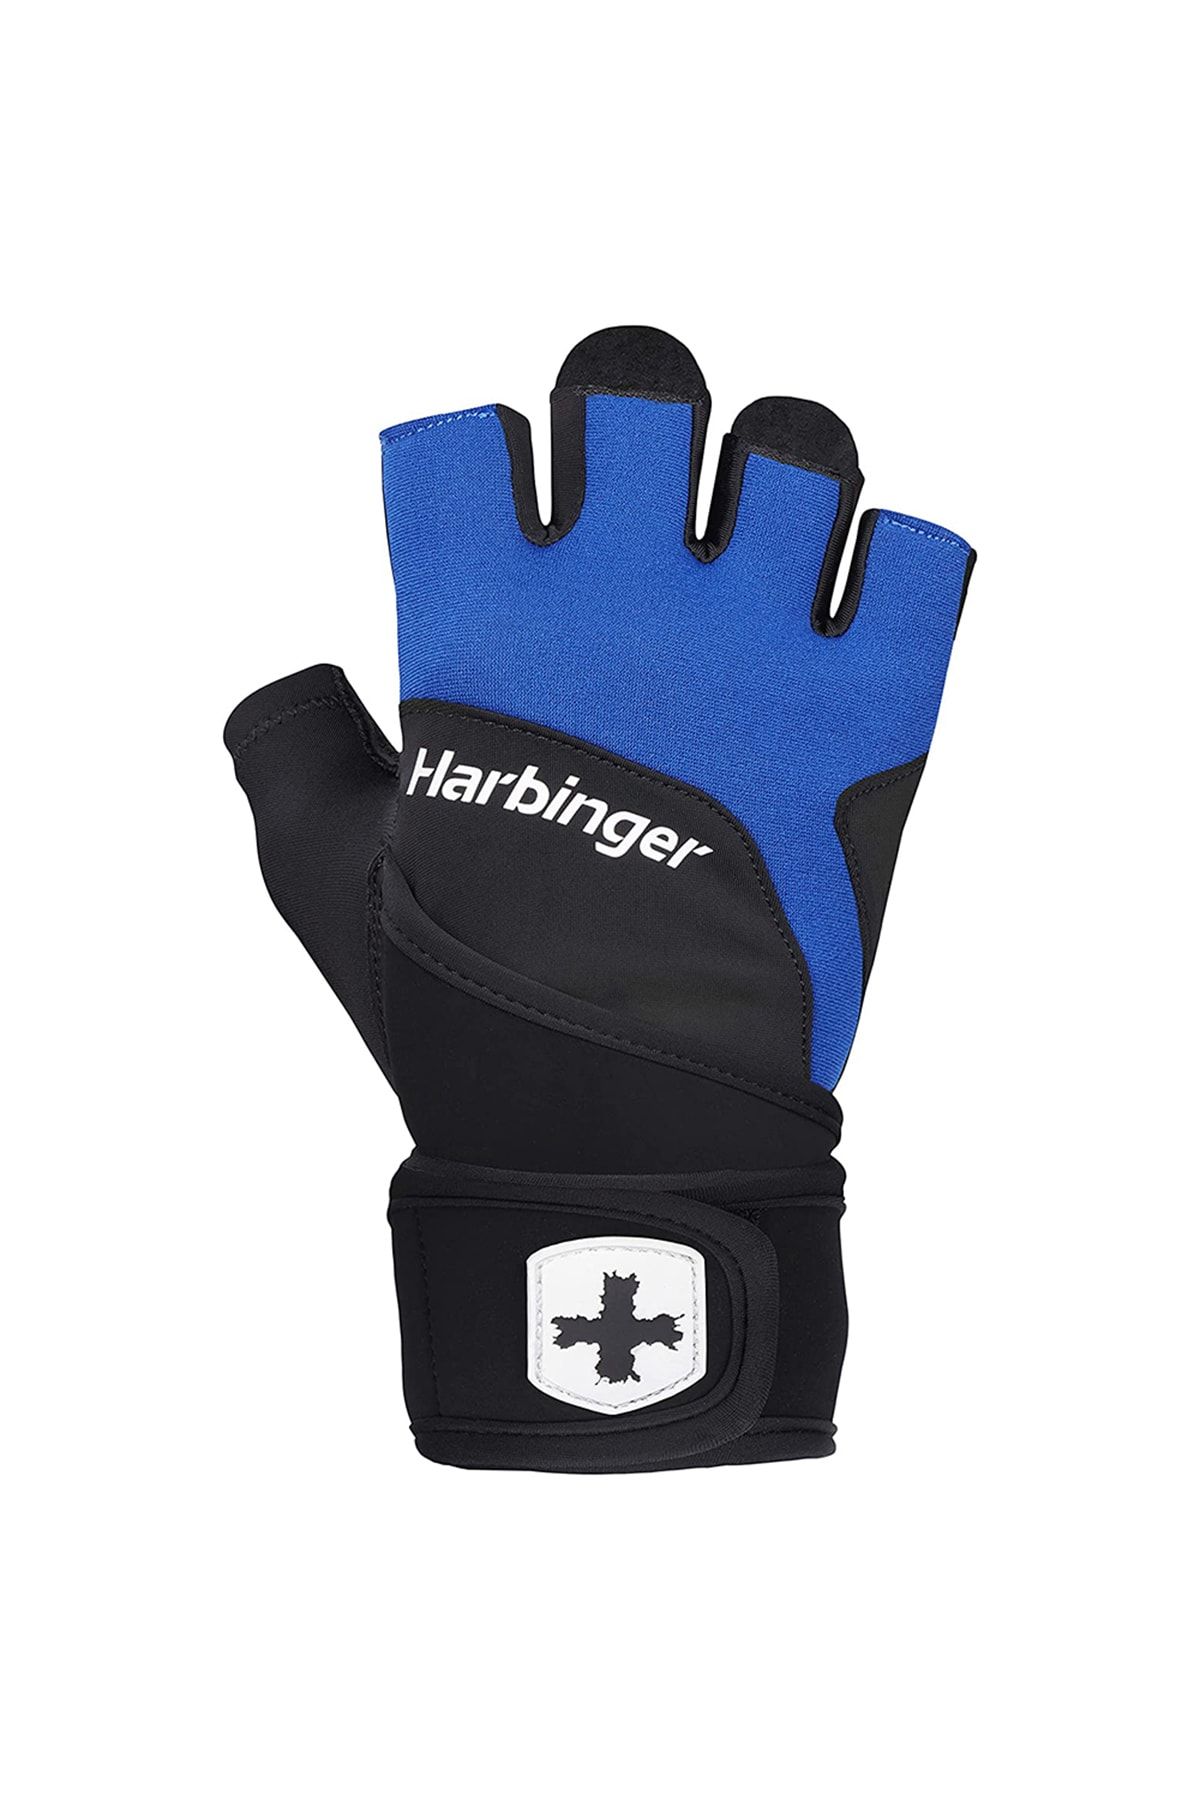 Harbinger 22296 Training Grip Wrist Wrap Fitness Eldiveni